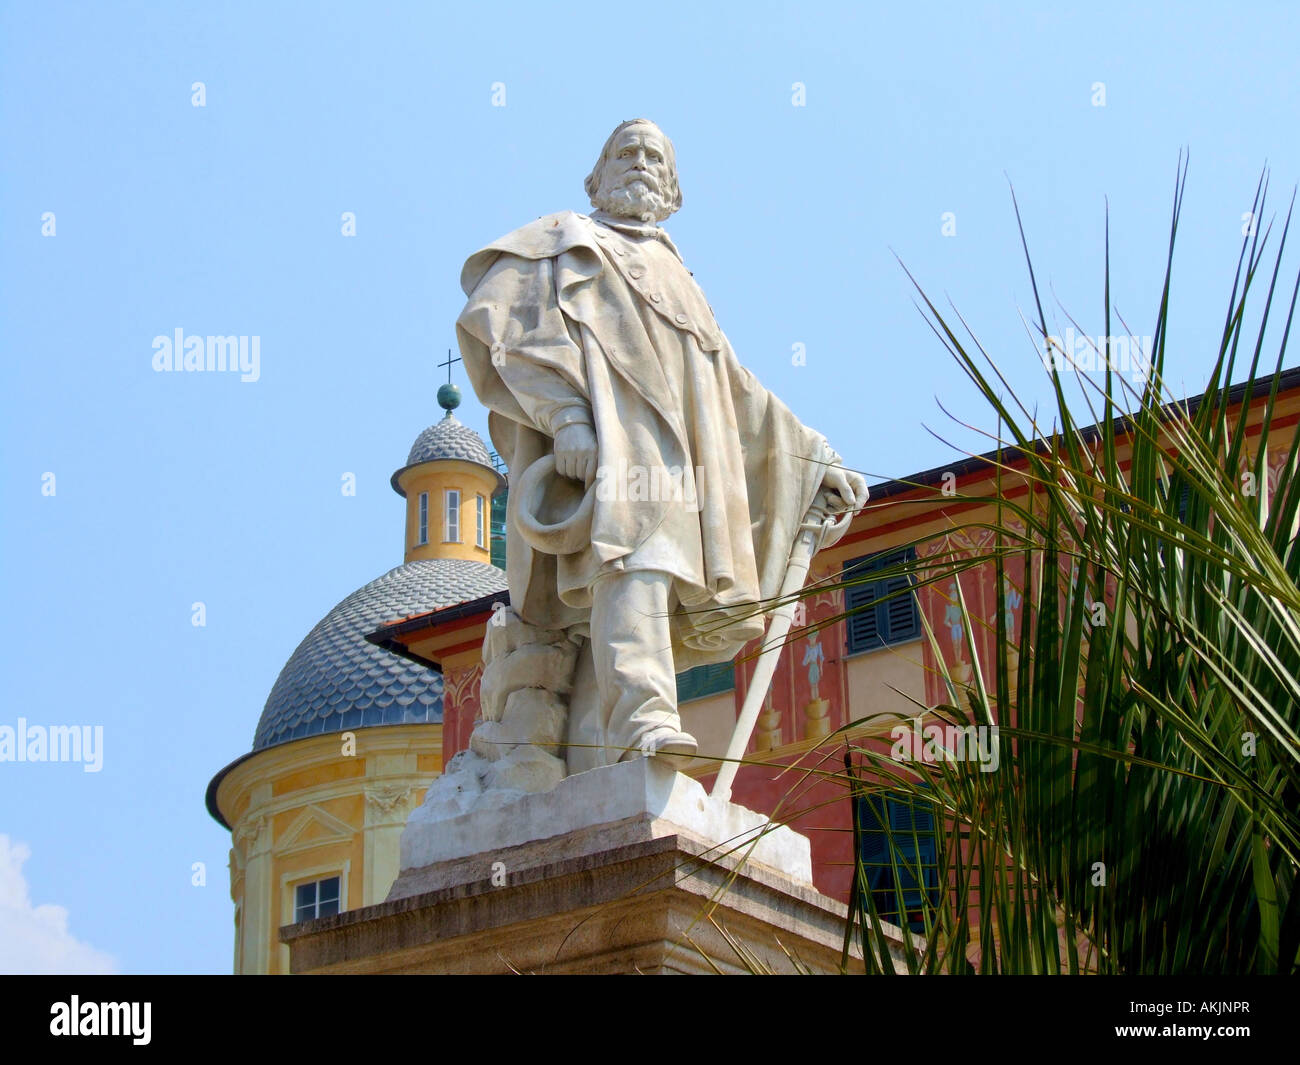 Chiesa di San Francesco e Giuseppe Garibaldi monumento, Chiavari, Liguria, Italia Foto Stock